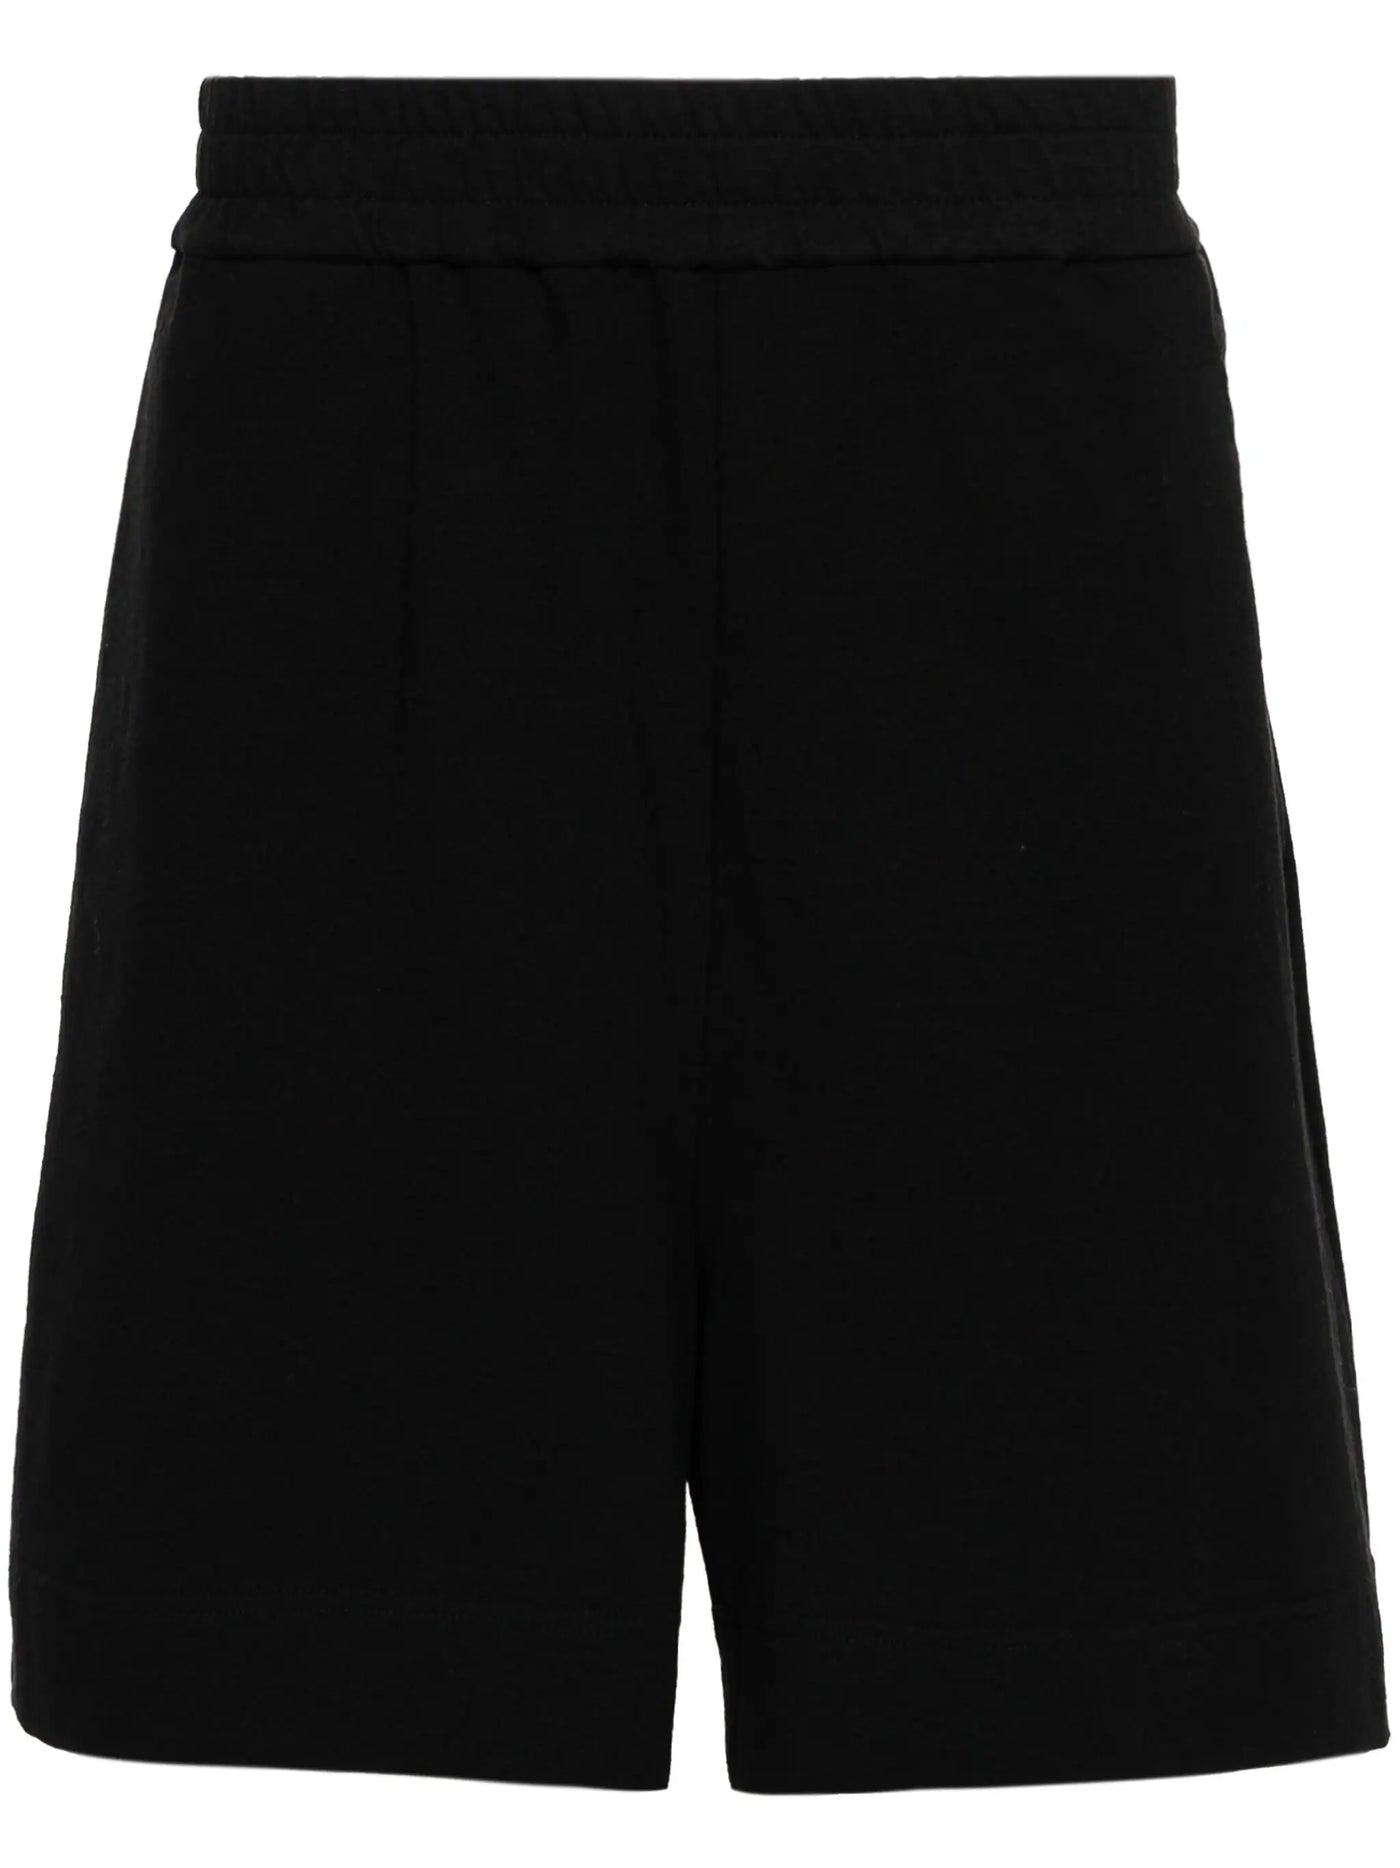 Off-White Diag Pocket Logo Printed Shorts in Black